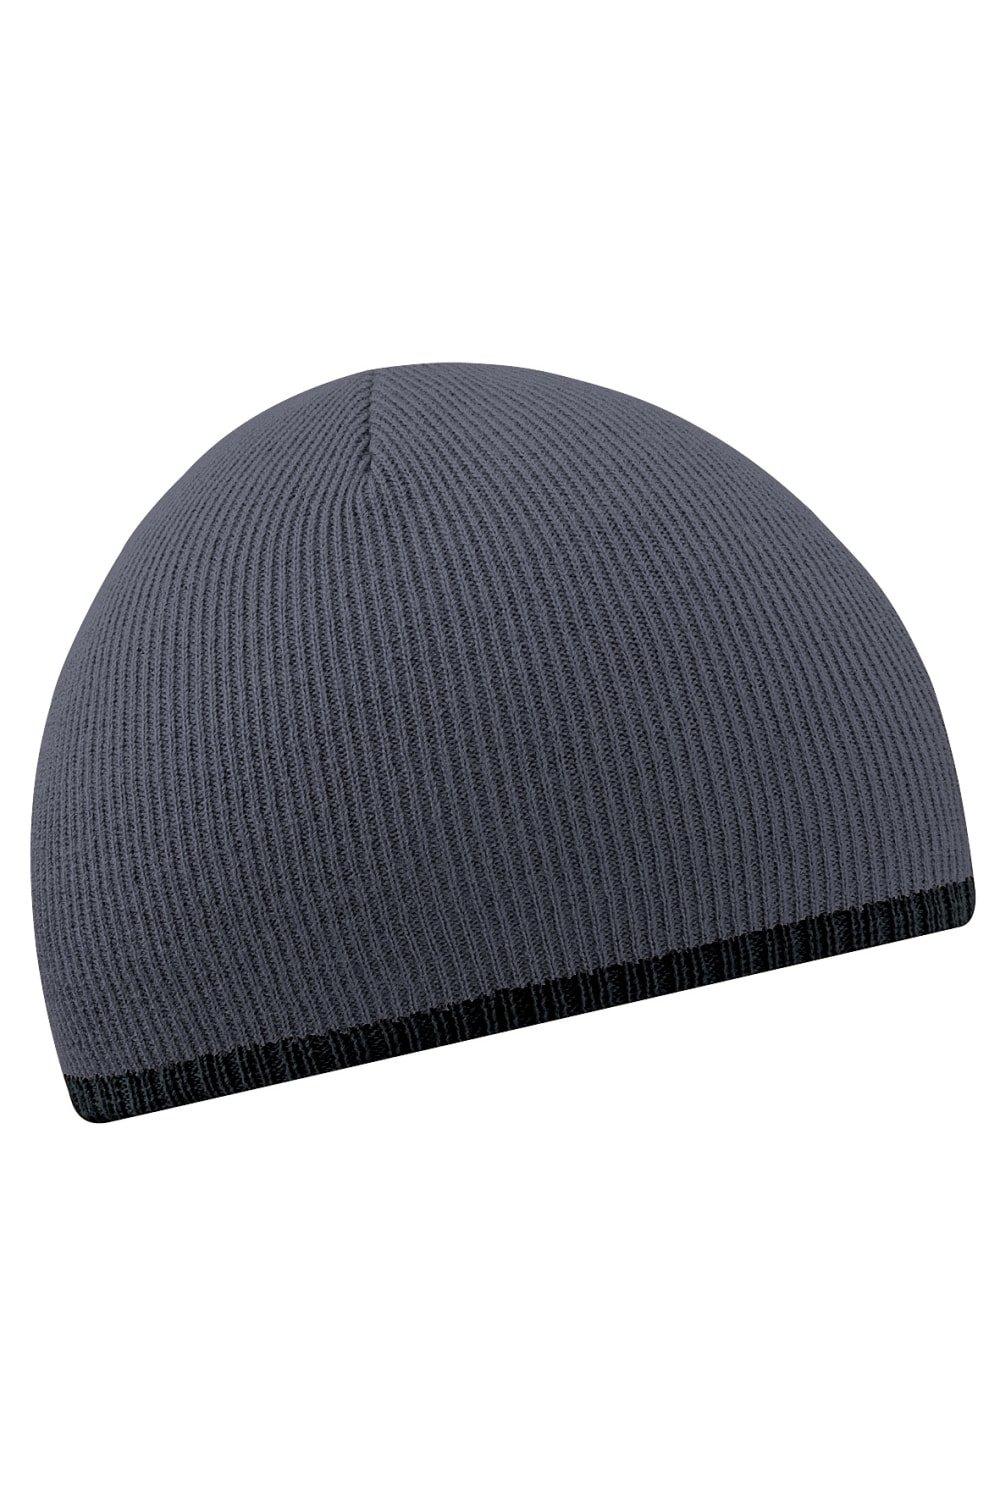 Двухцветная вязаная зимняя шапка-бини Beechfield, серый